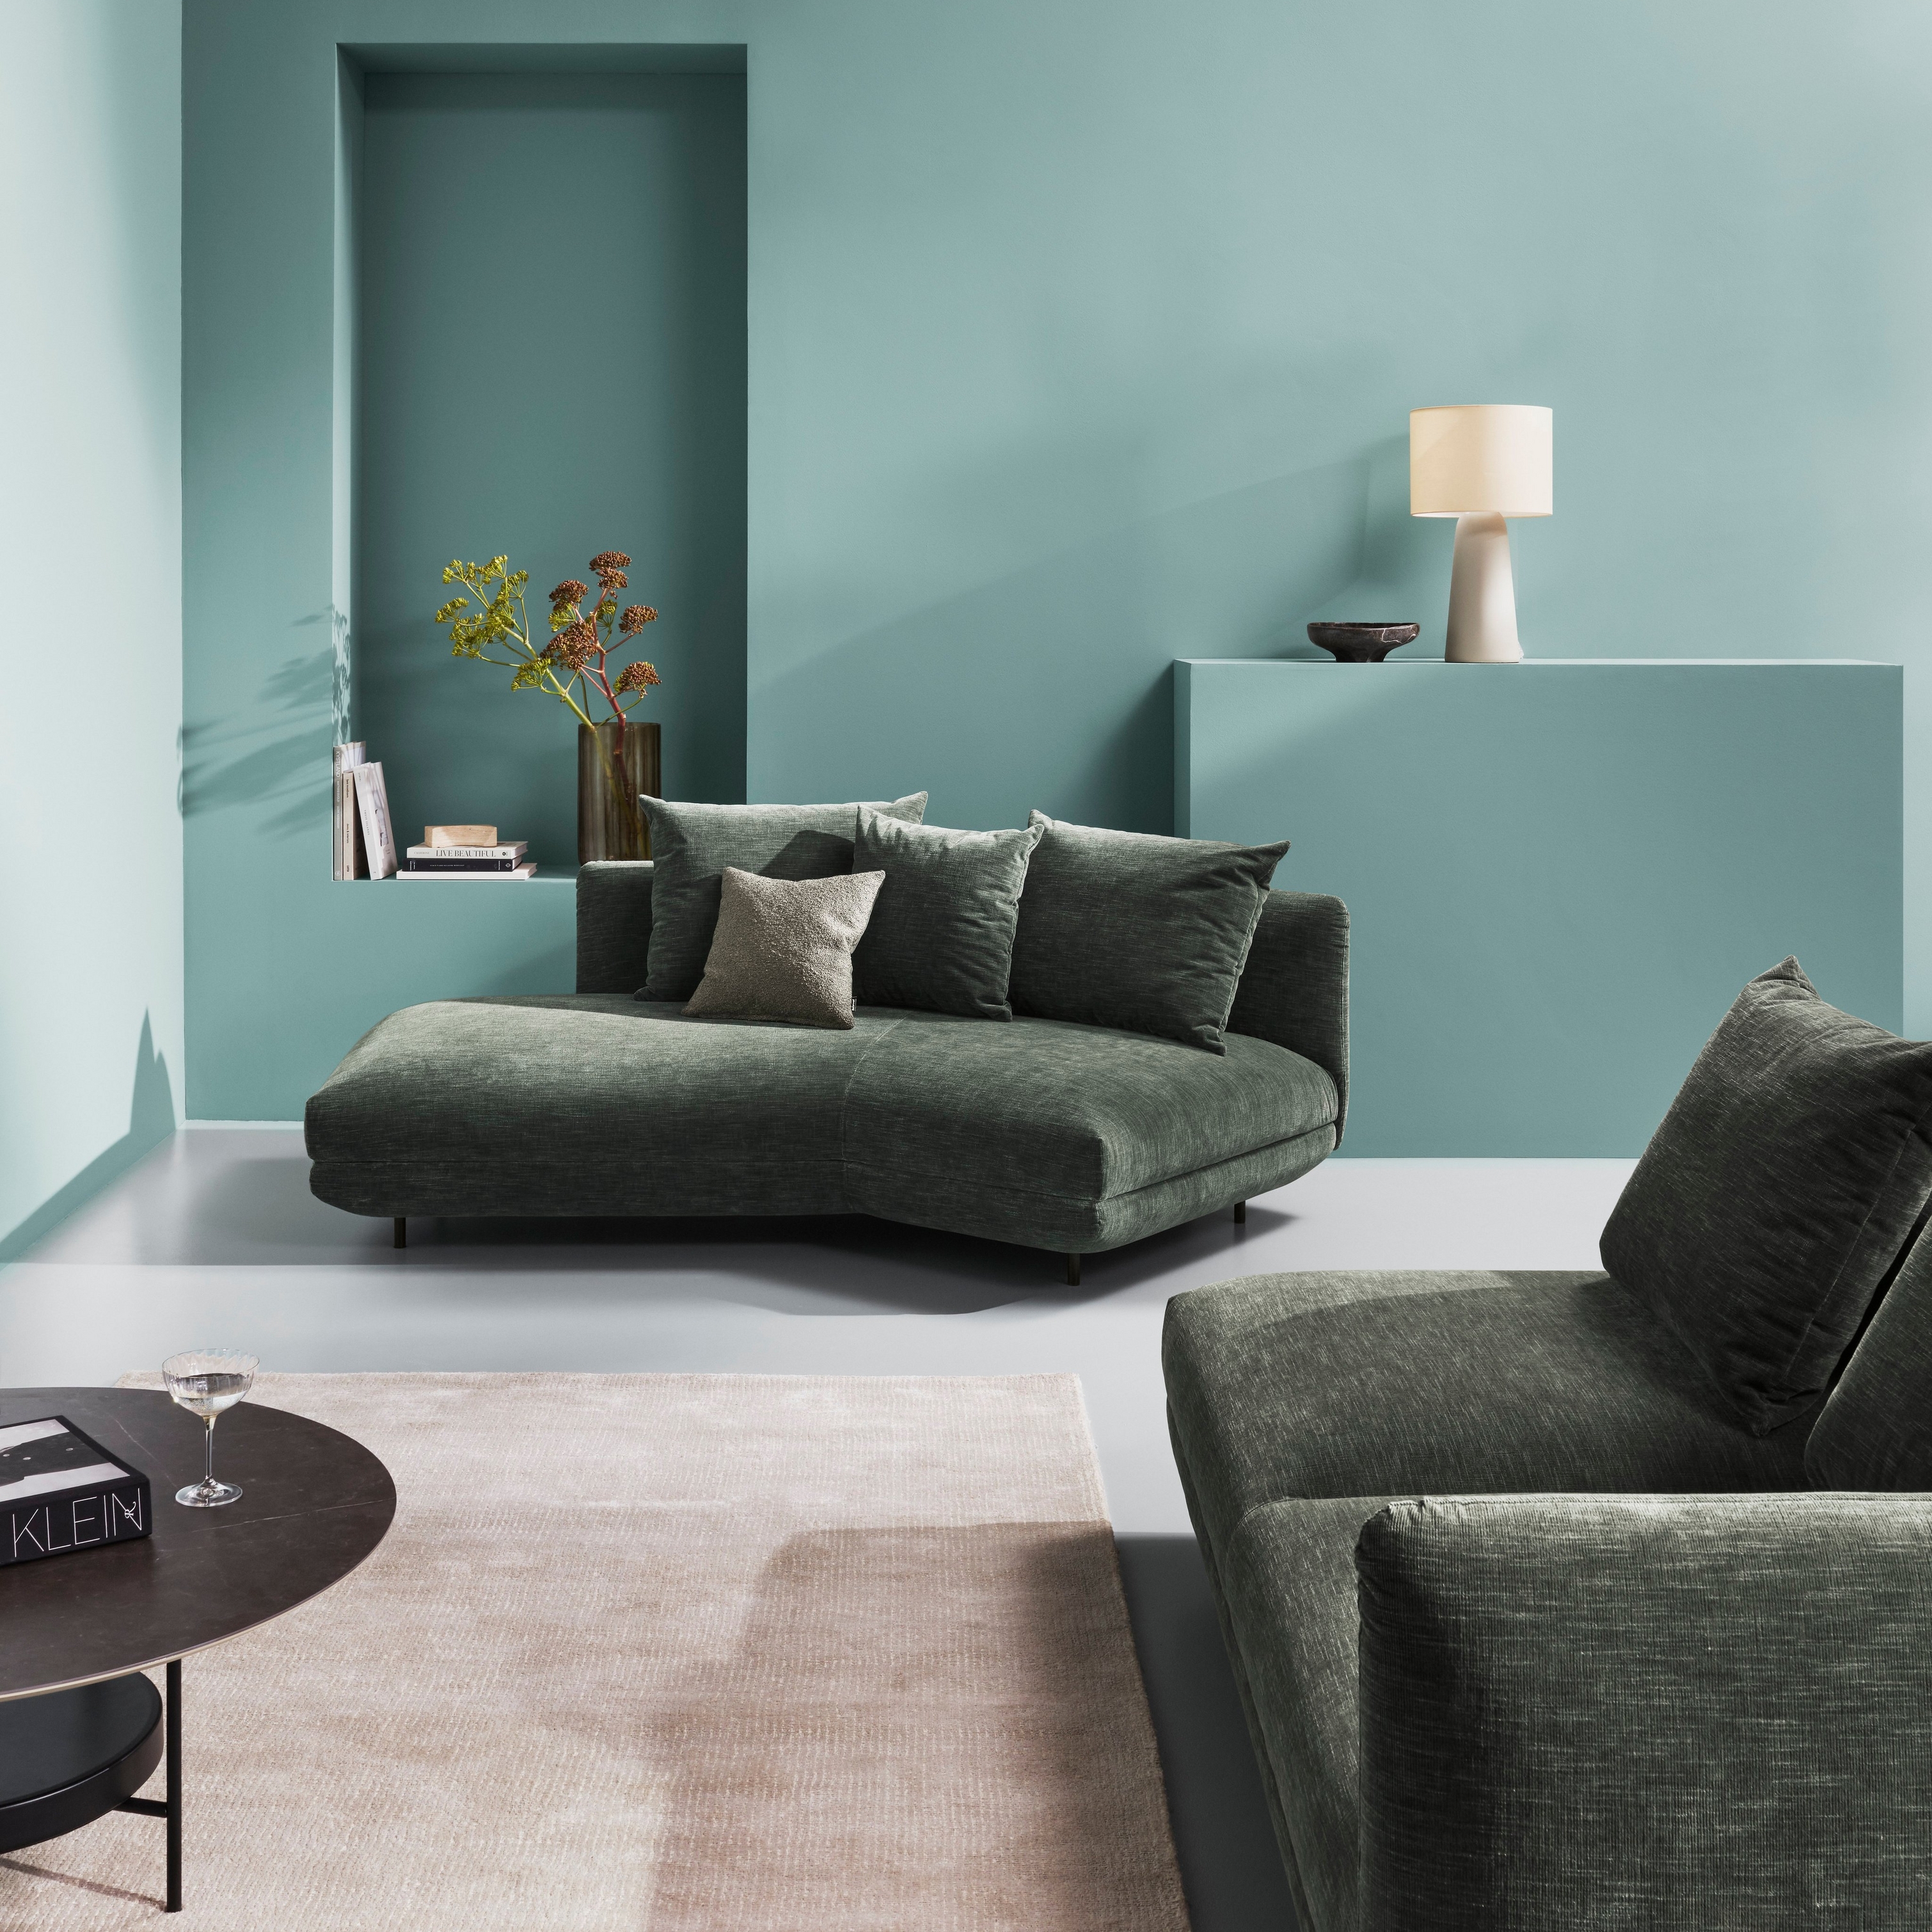 A contemporary living space featuring the Salamanca sofa.